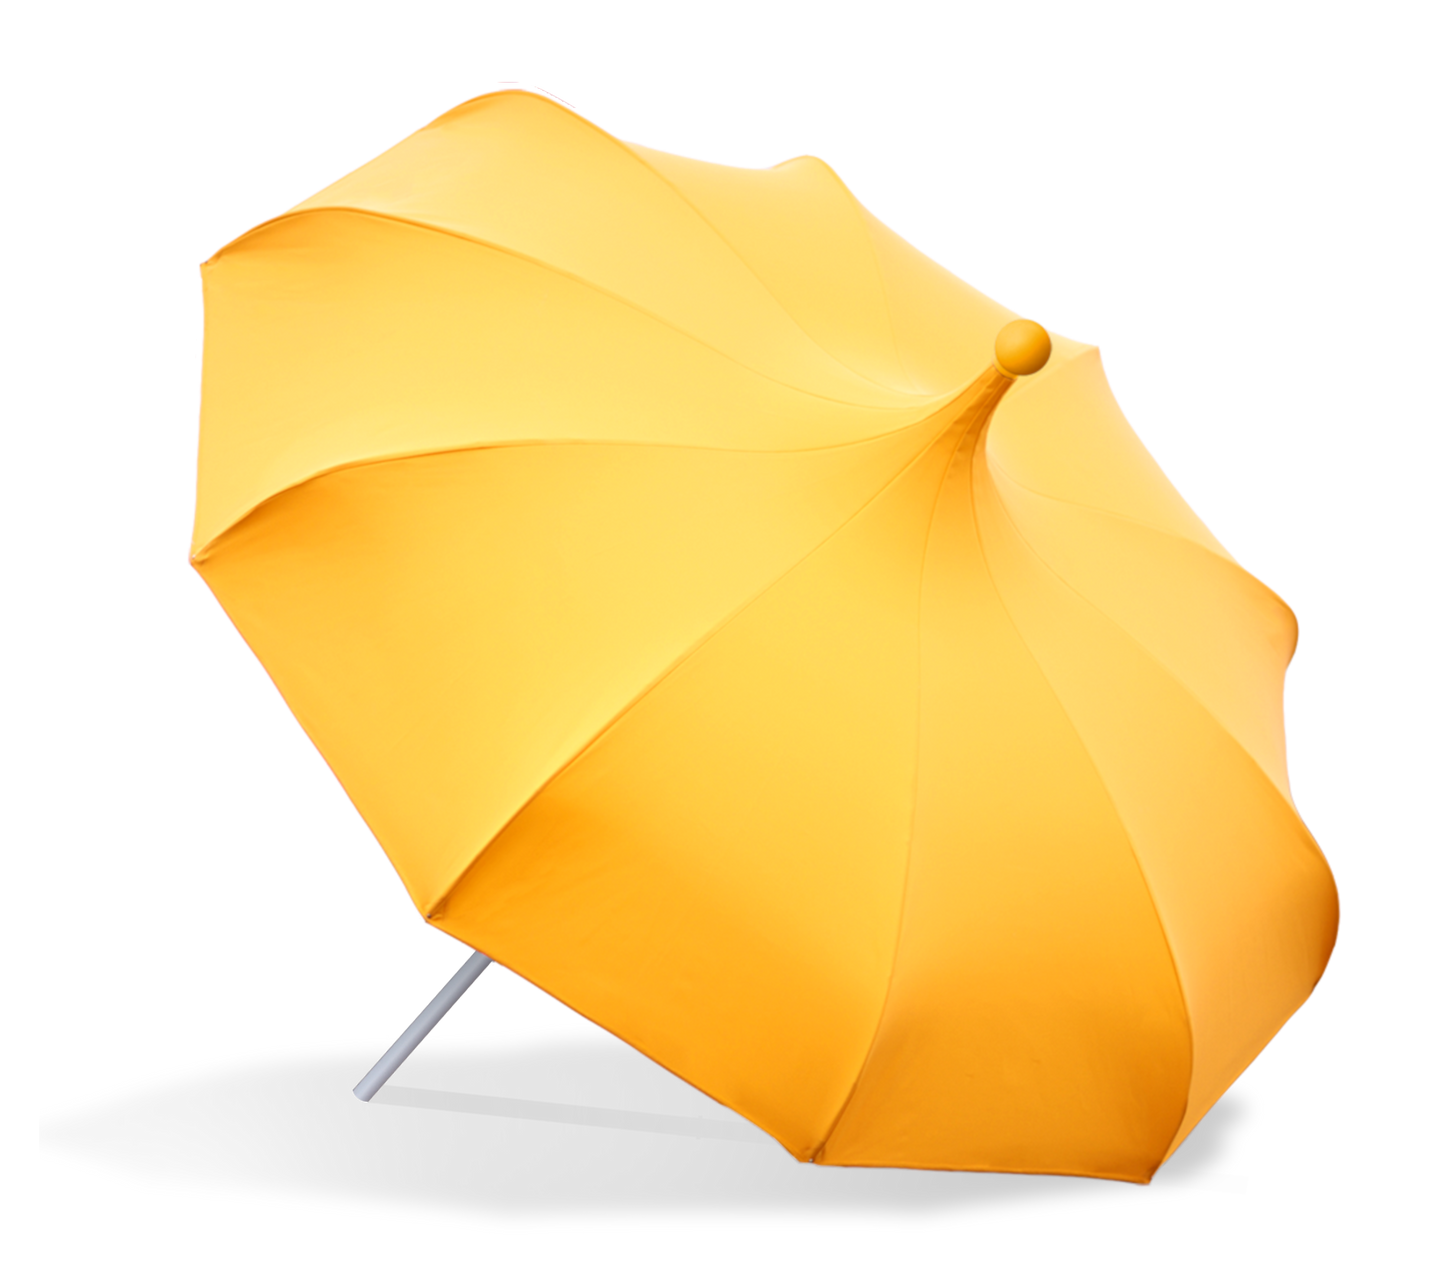 Yellow parasol